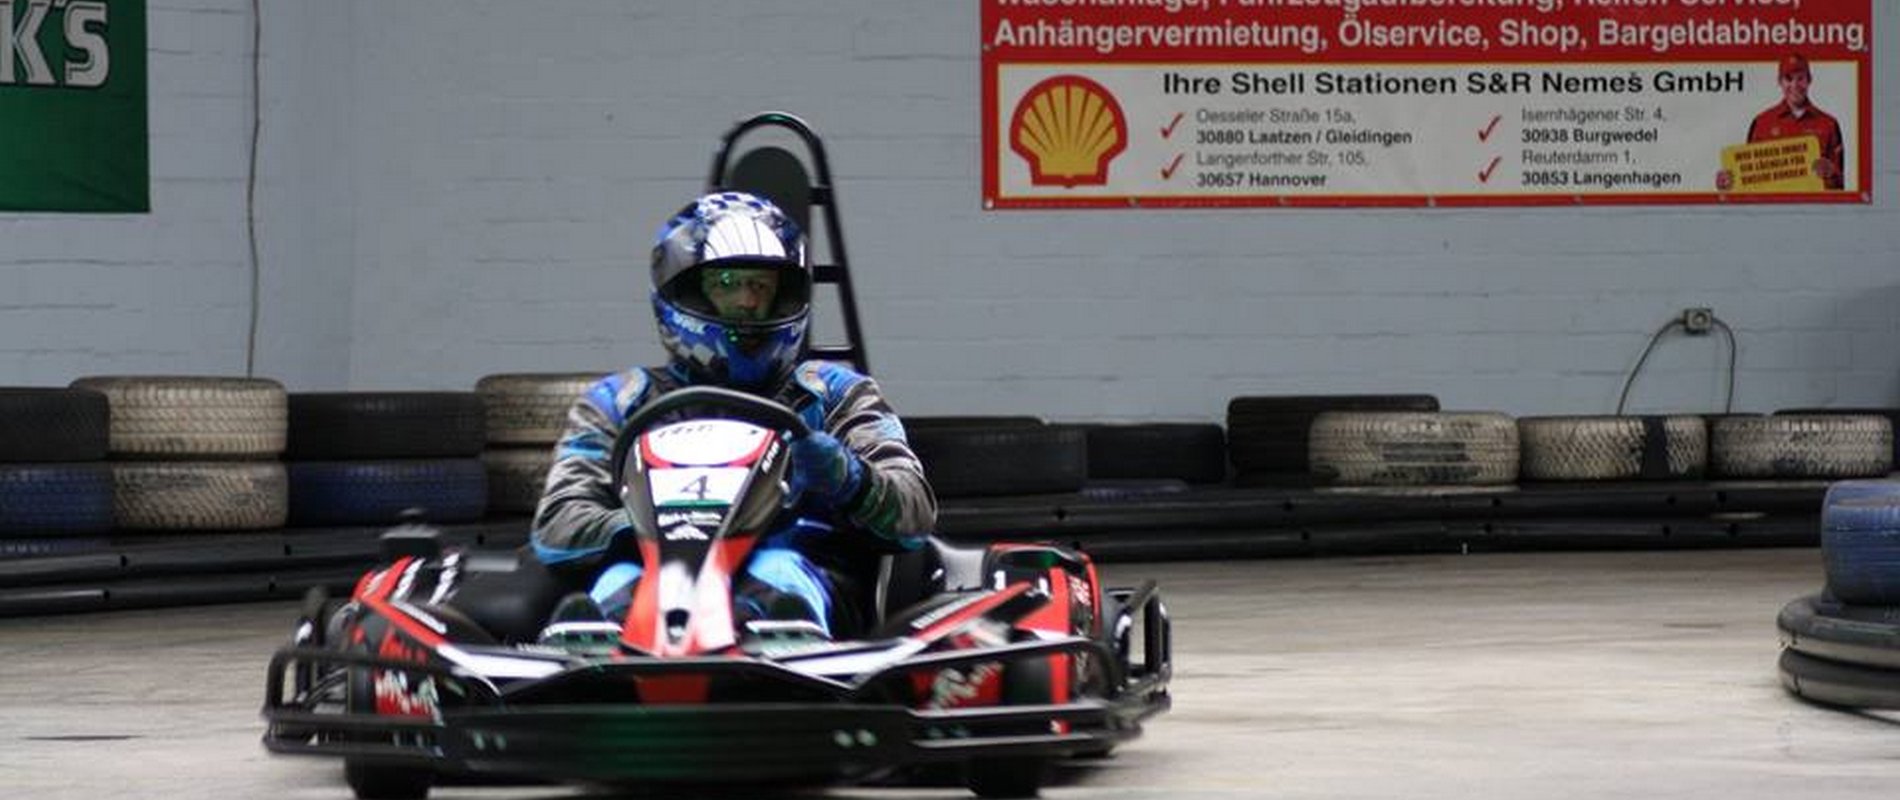 sv-racing-team aus hannover